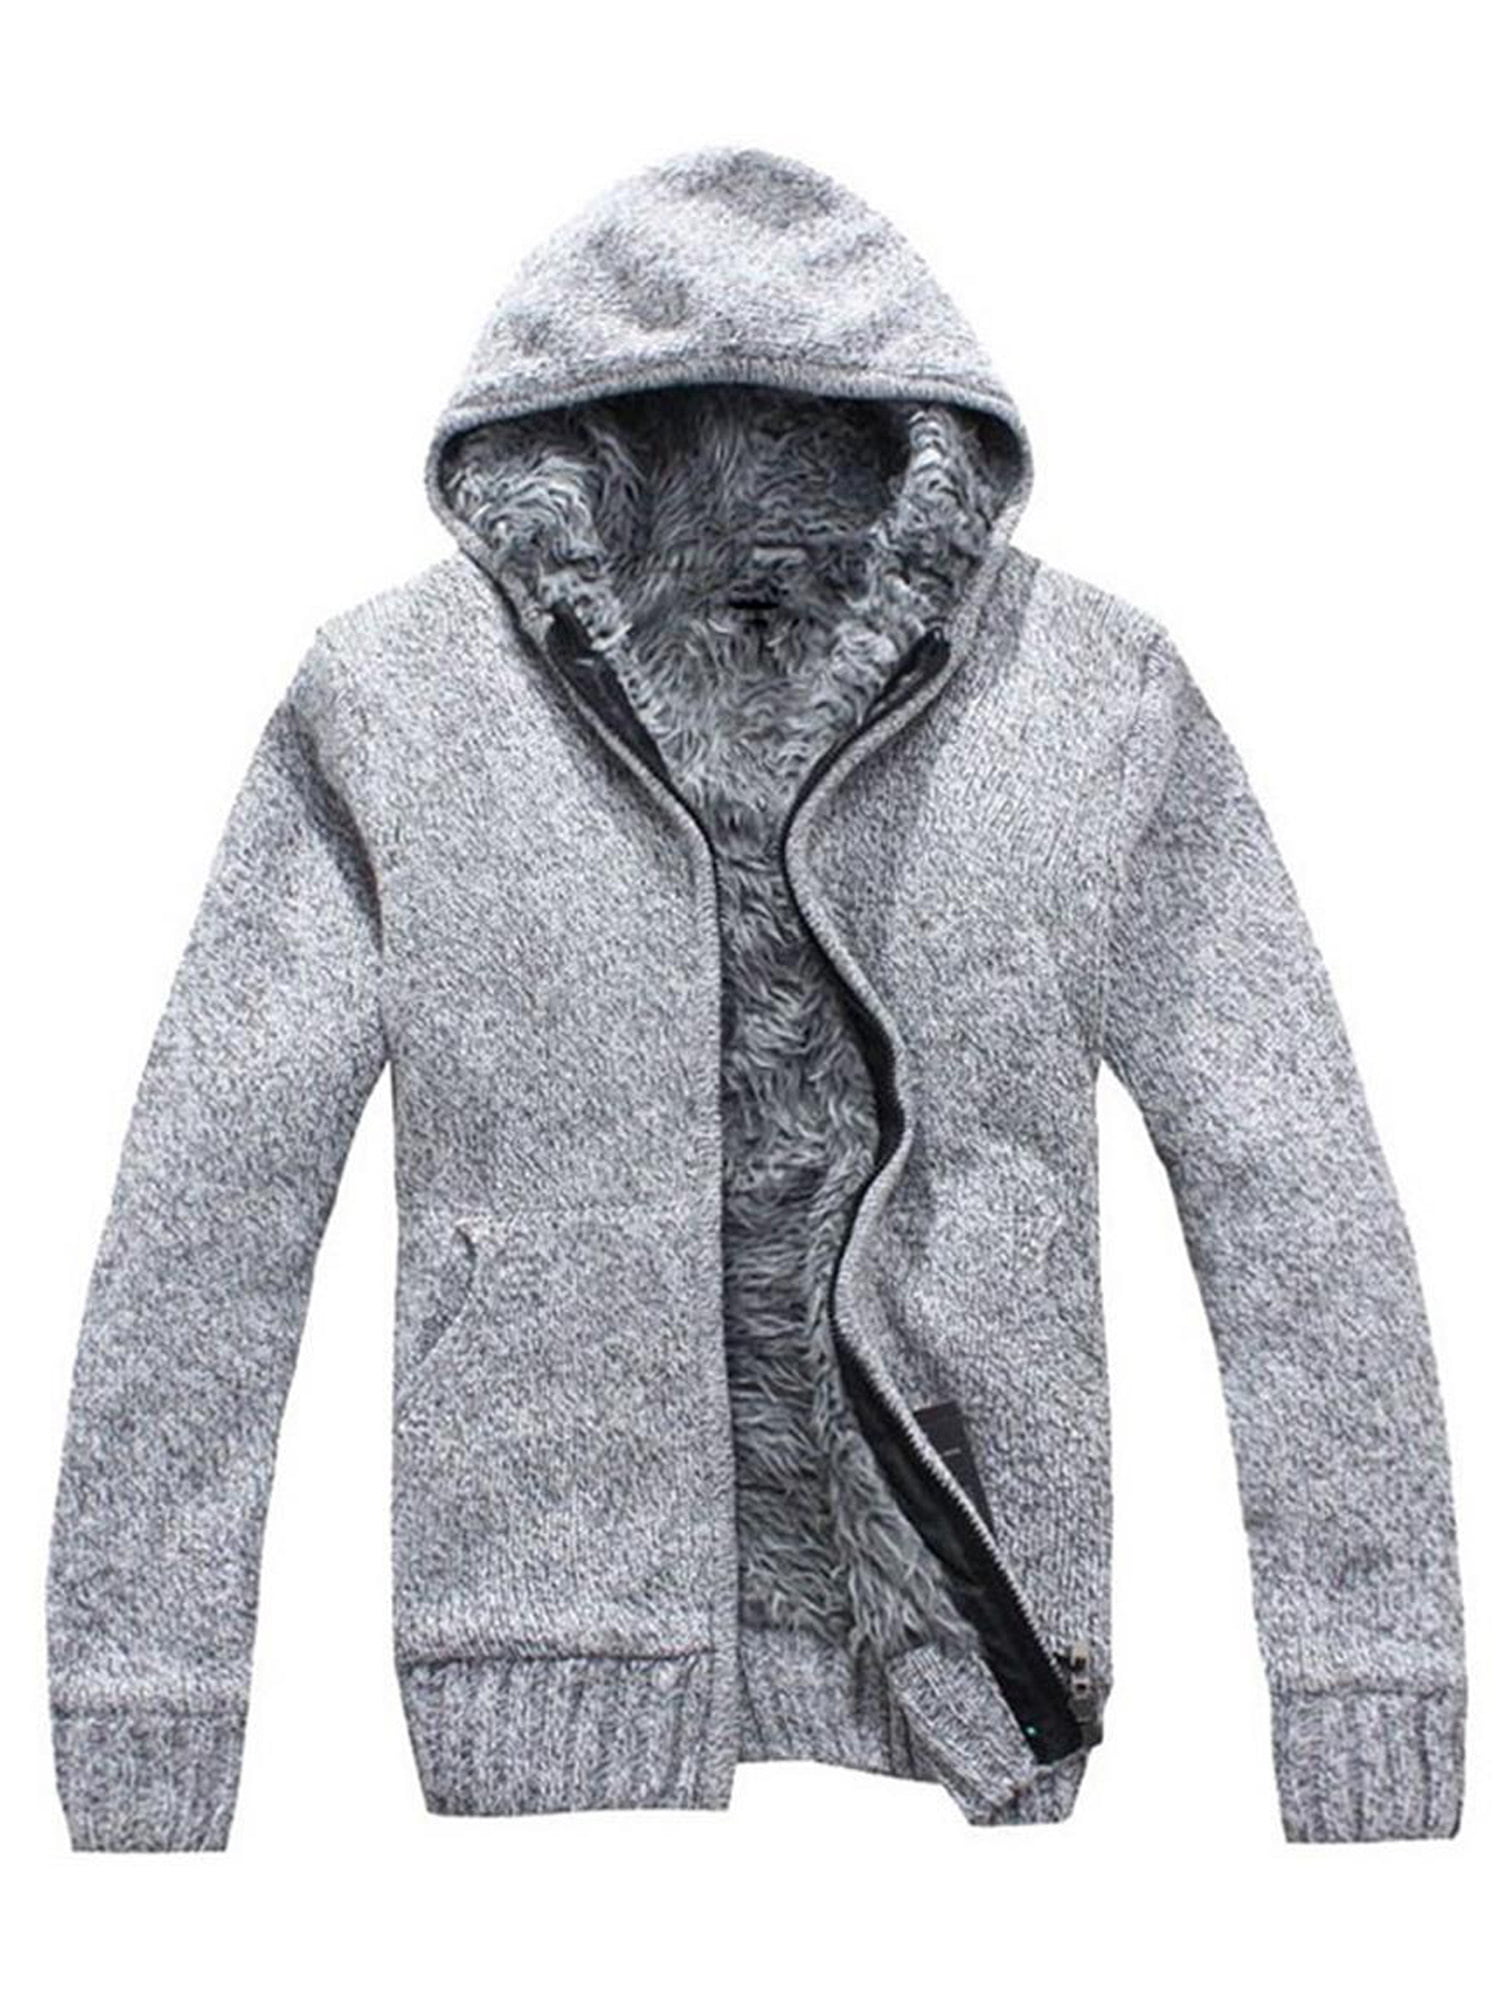 Mens Winter Thick Sweater Warm Zip Casual Knitwear Coat Long Sleeve Top Outwear 